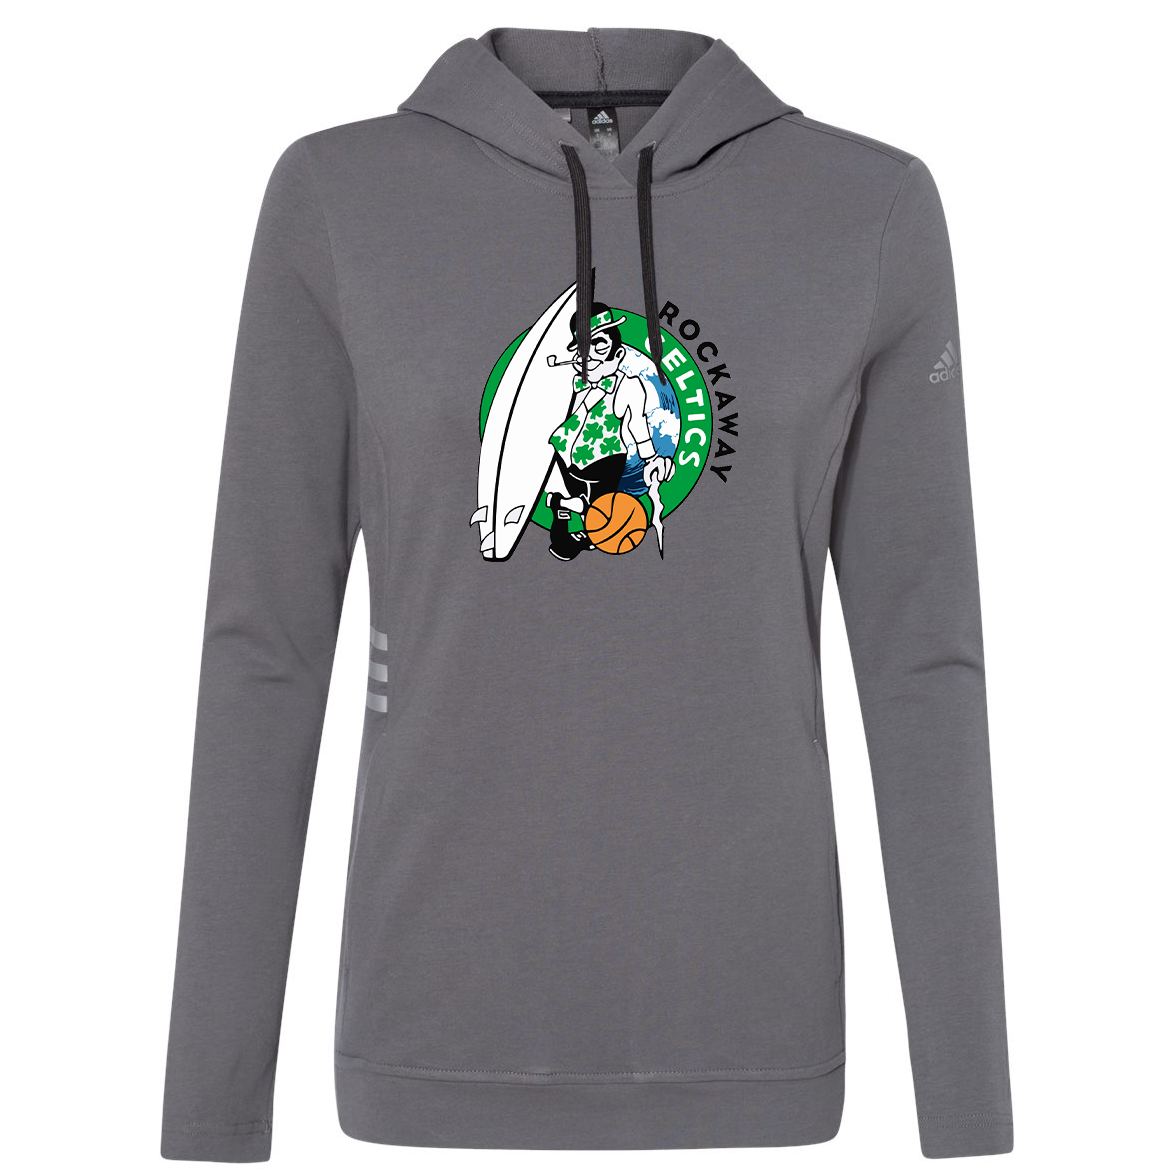 Rockaway Celtics Adidas Women's Sweatshirt